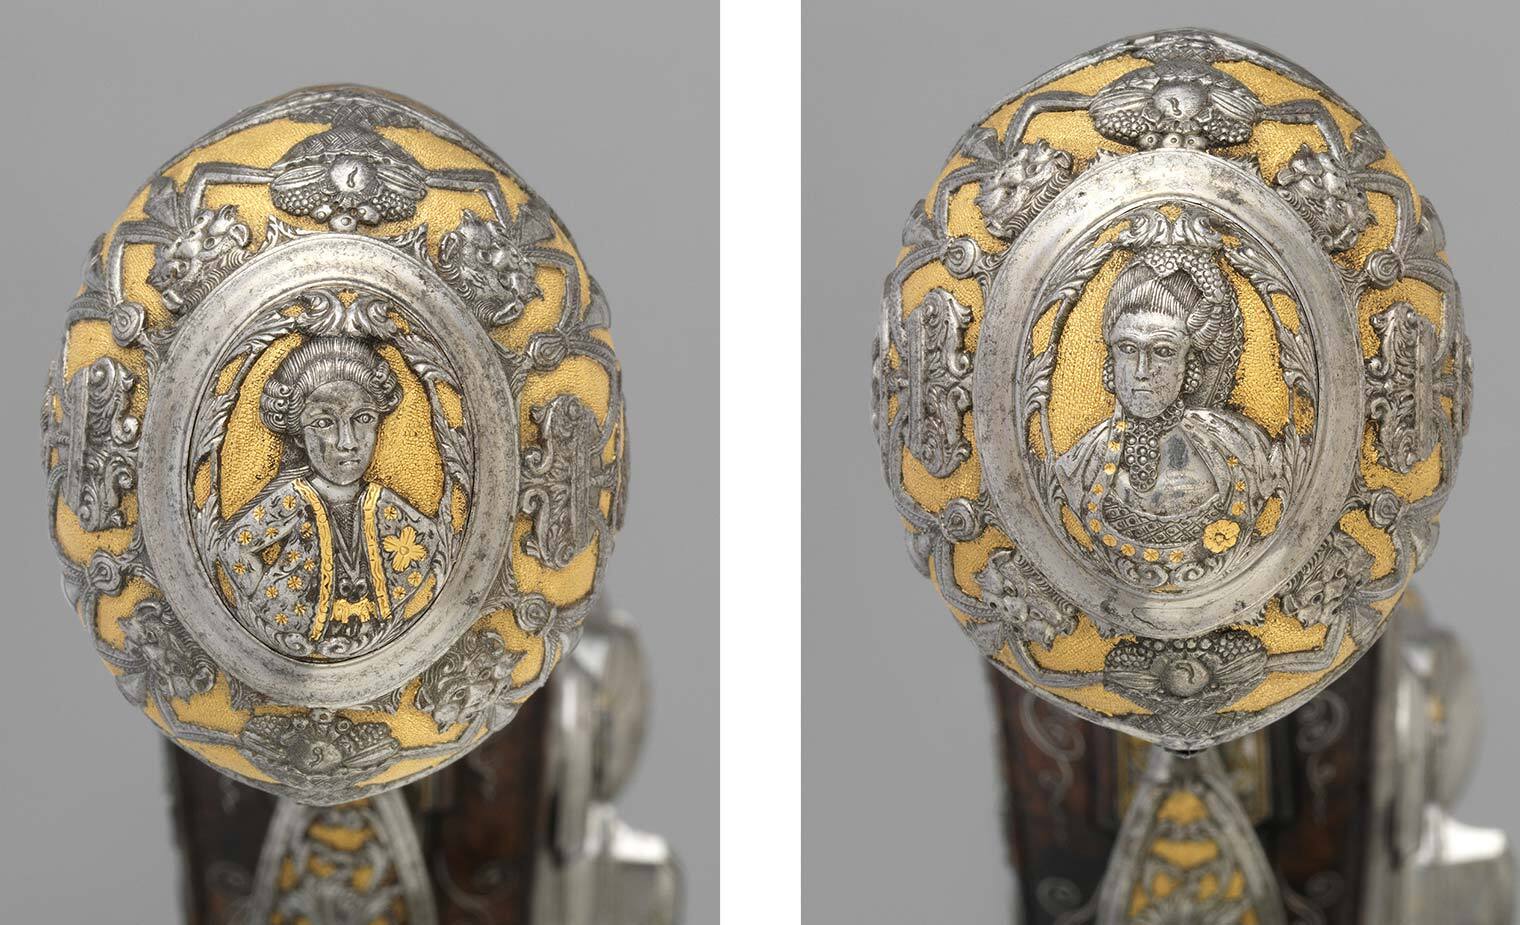 Two portrait medallions on the hilt of pistols